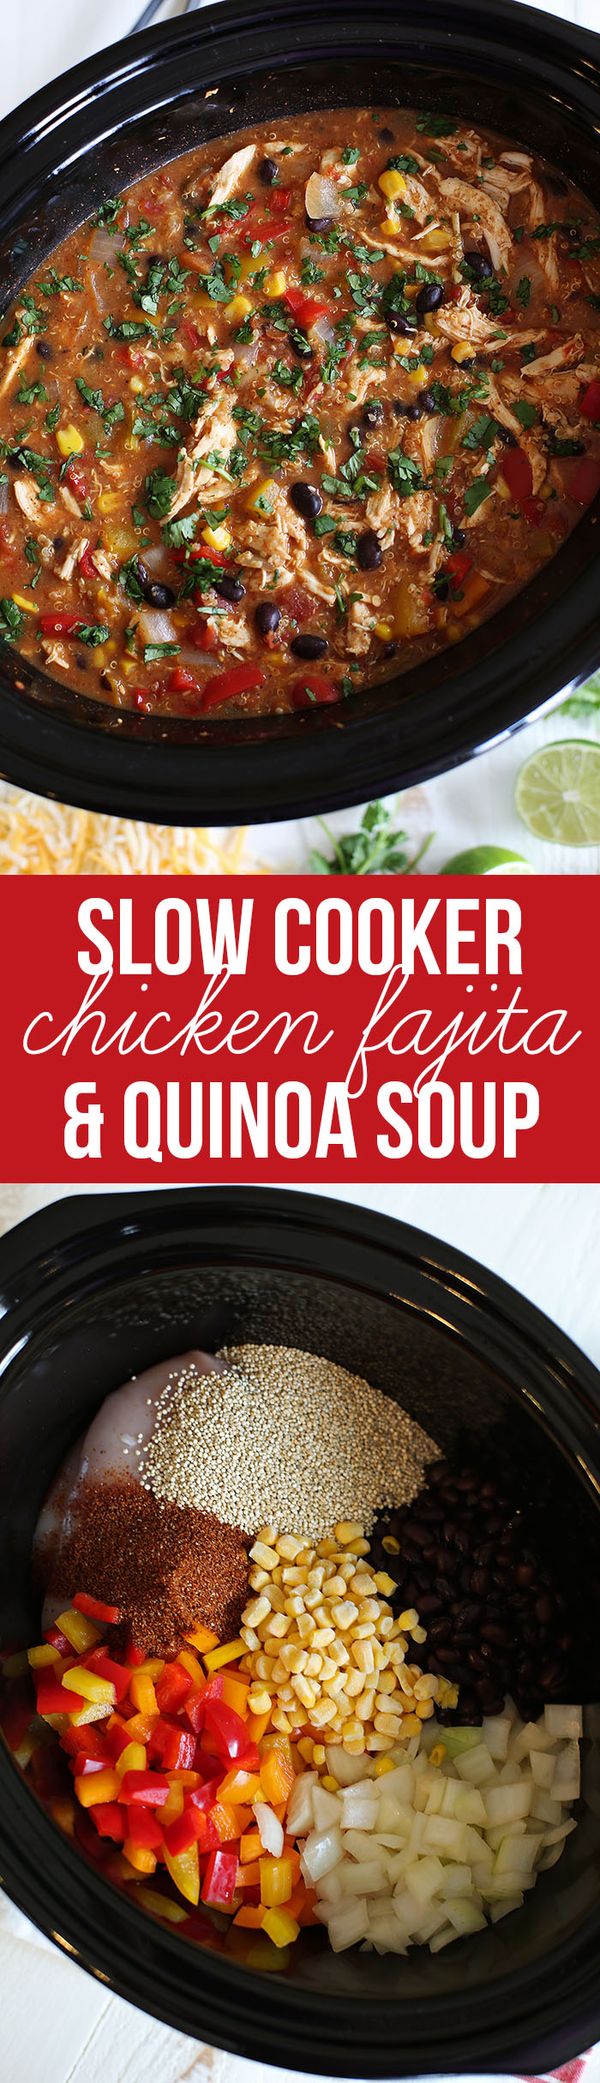 Slow Cooker Chicken Fajita & Quinoa Soup